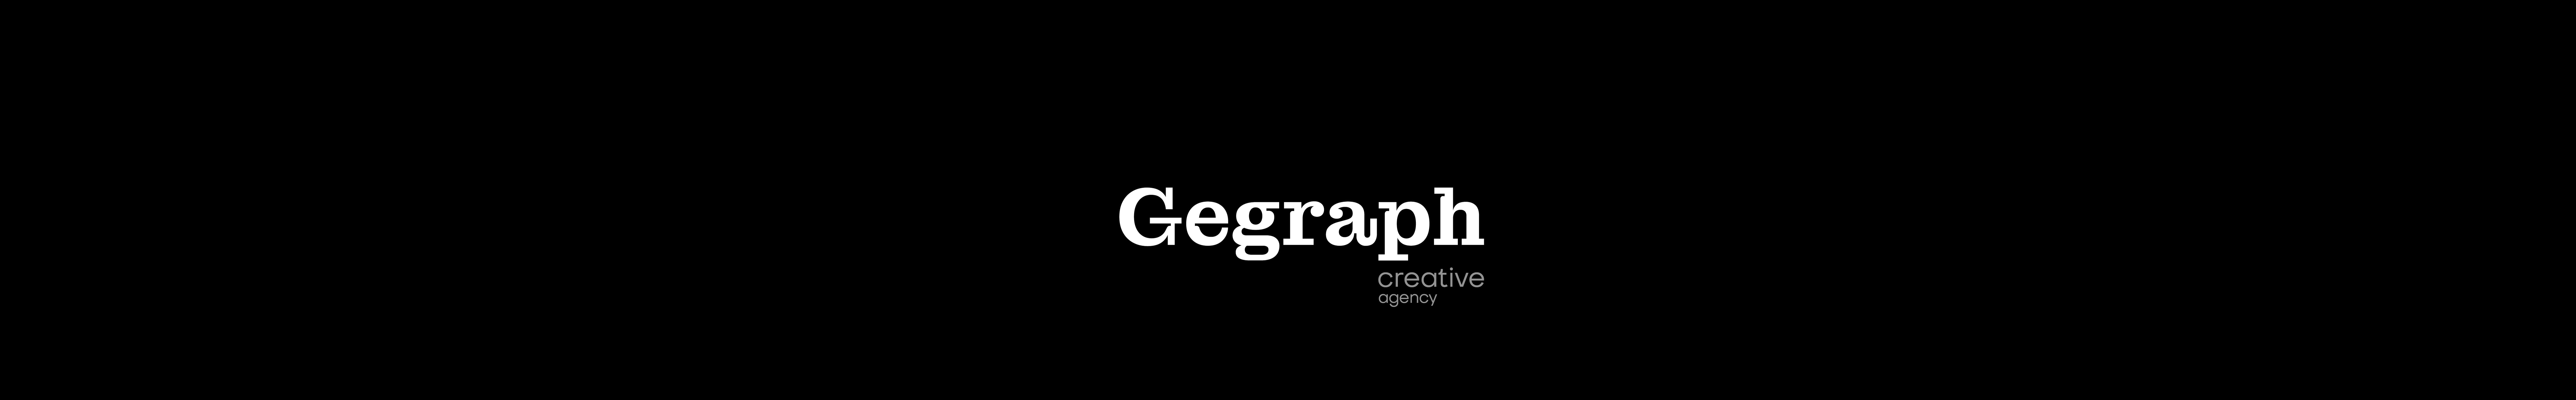 Banner de perfil de GEGRAPH agency